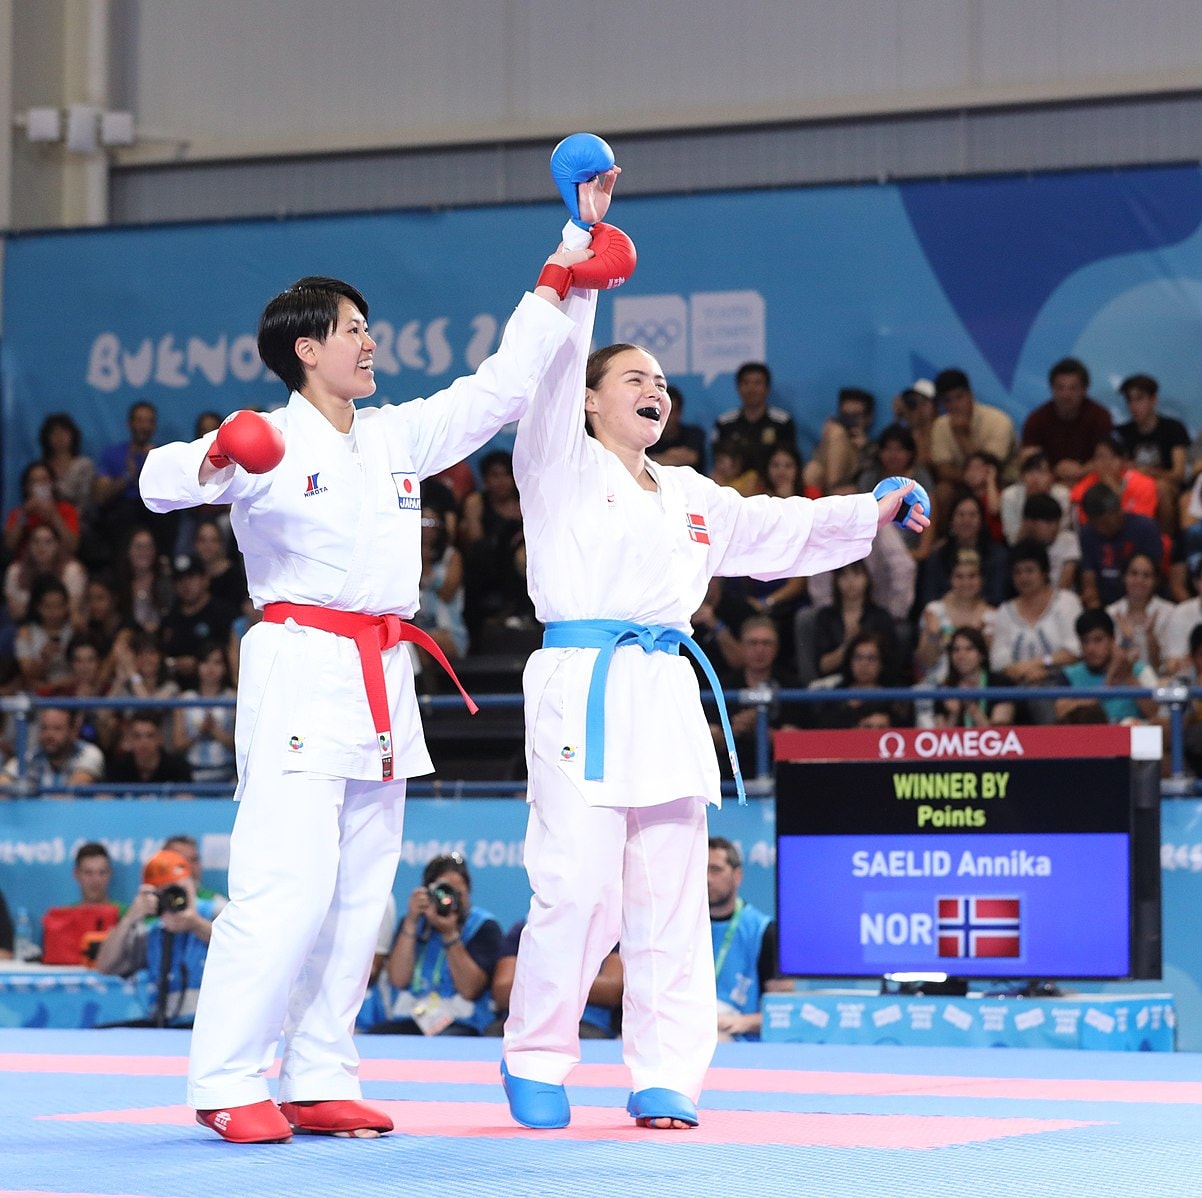 new events tokyo olympics - kumite victory